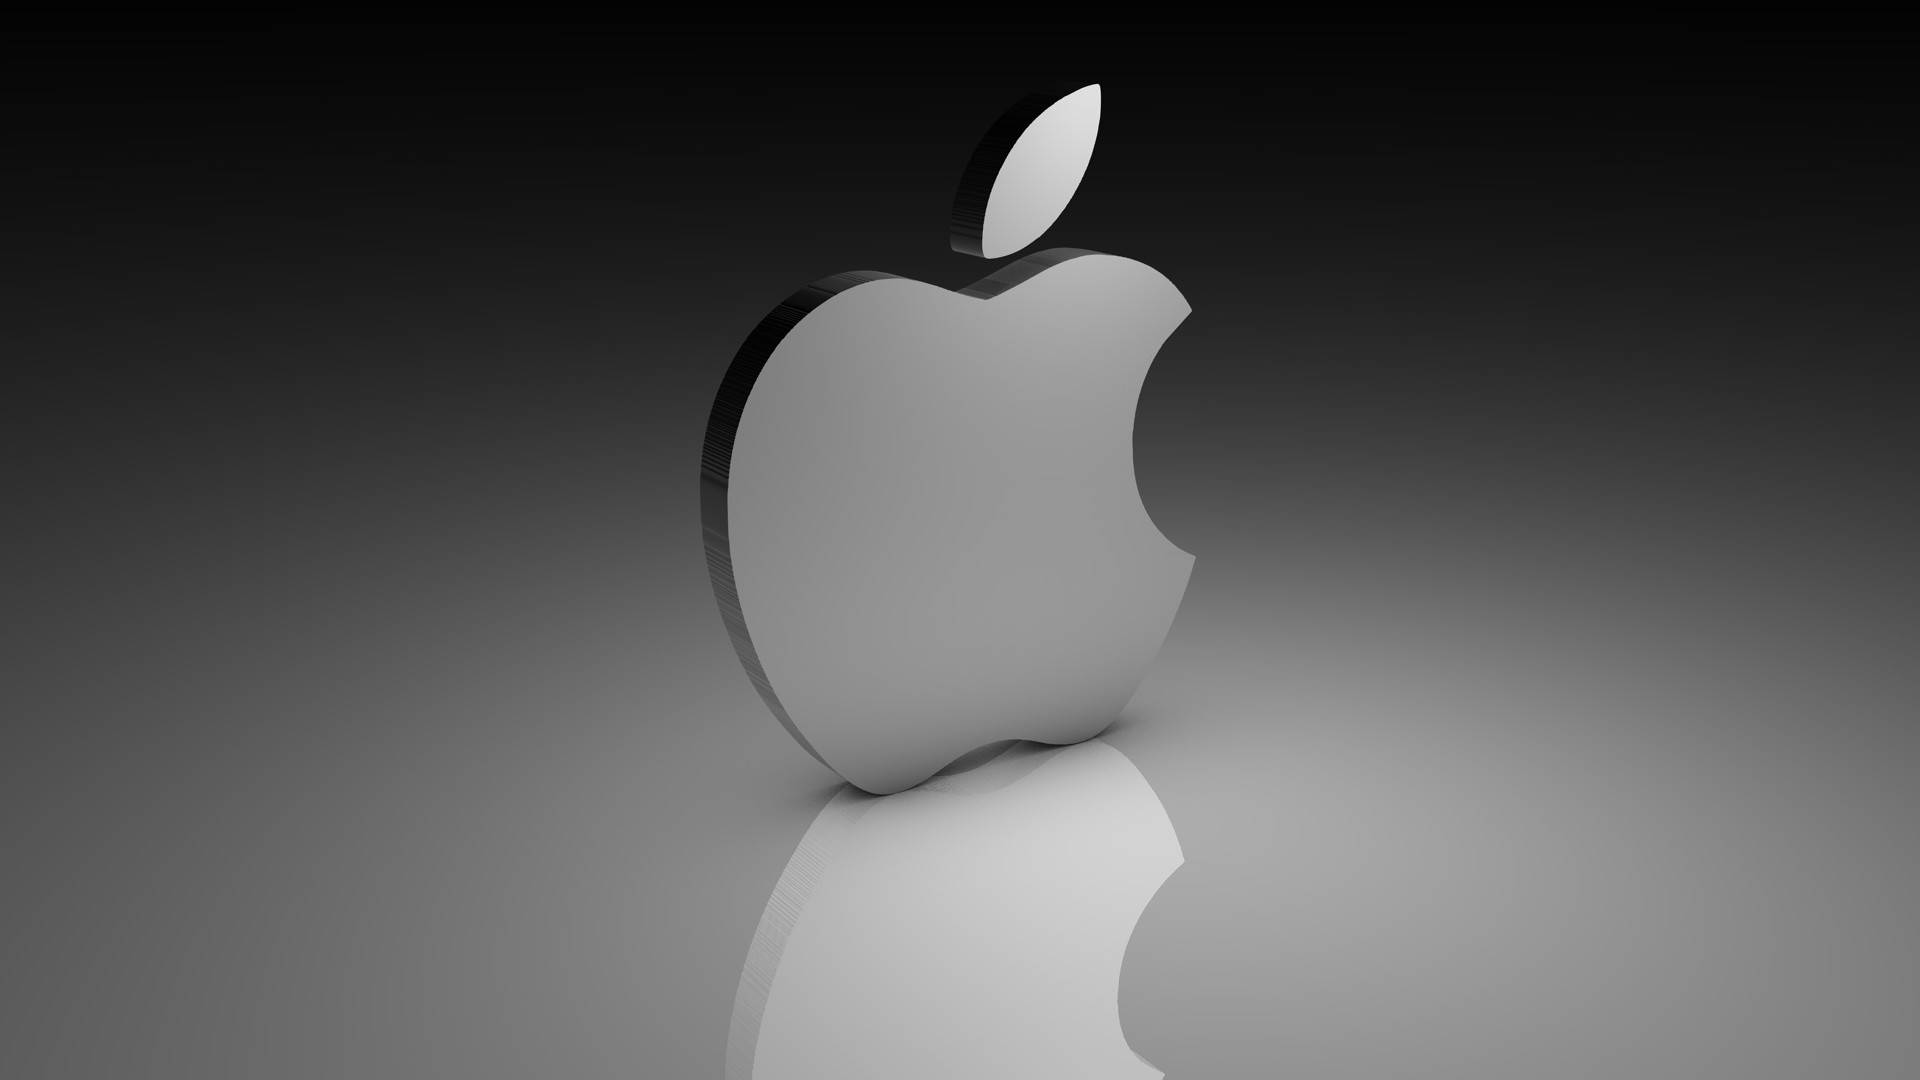 Gray Apple Logo Mac Os Picture